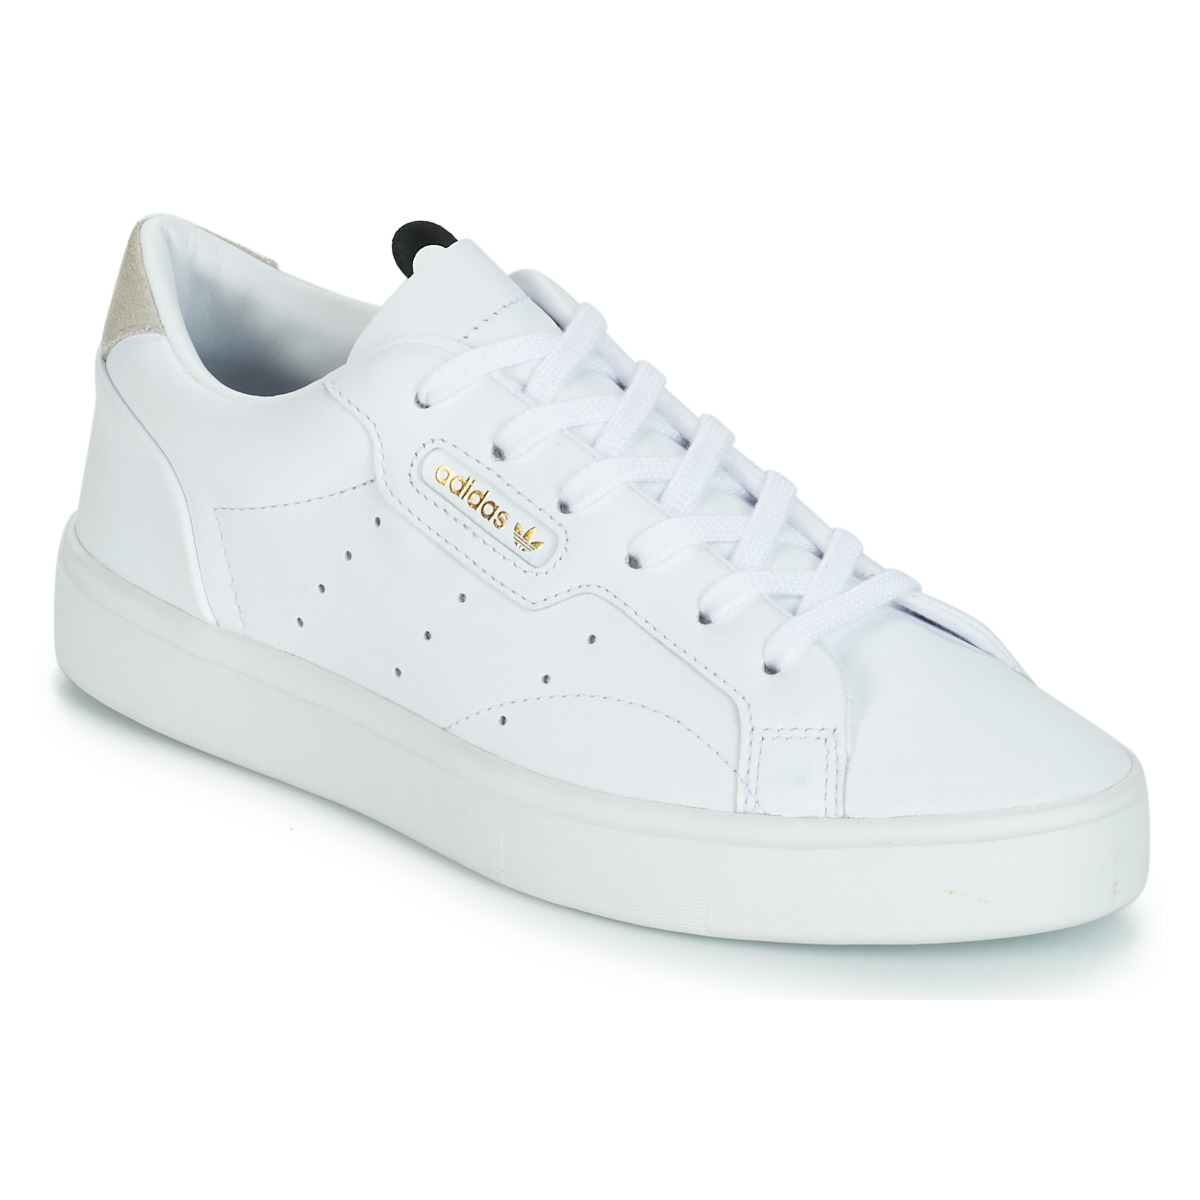 adidas Originals adidas SLEEK W Bianco - Consegna gratuita | Spartoo.it ! -  Scarpe Sneakers basse Donna 71,99 €